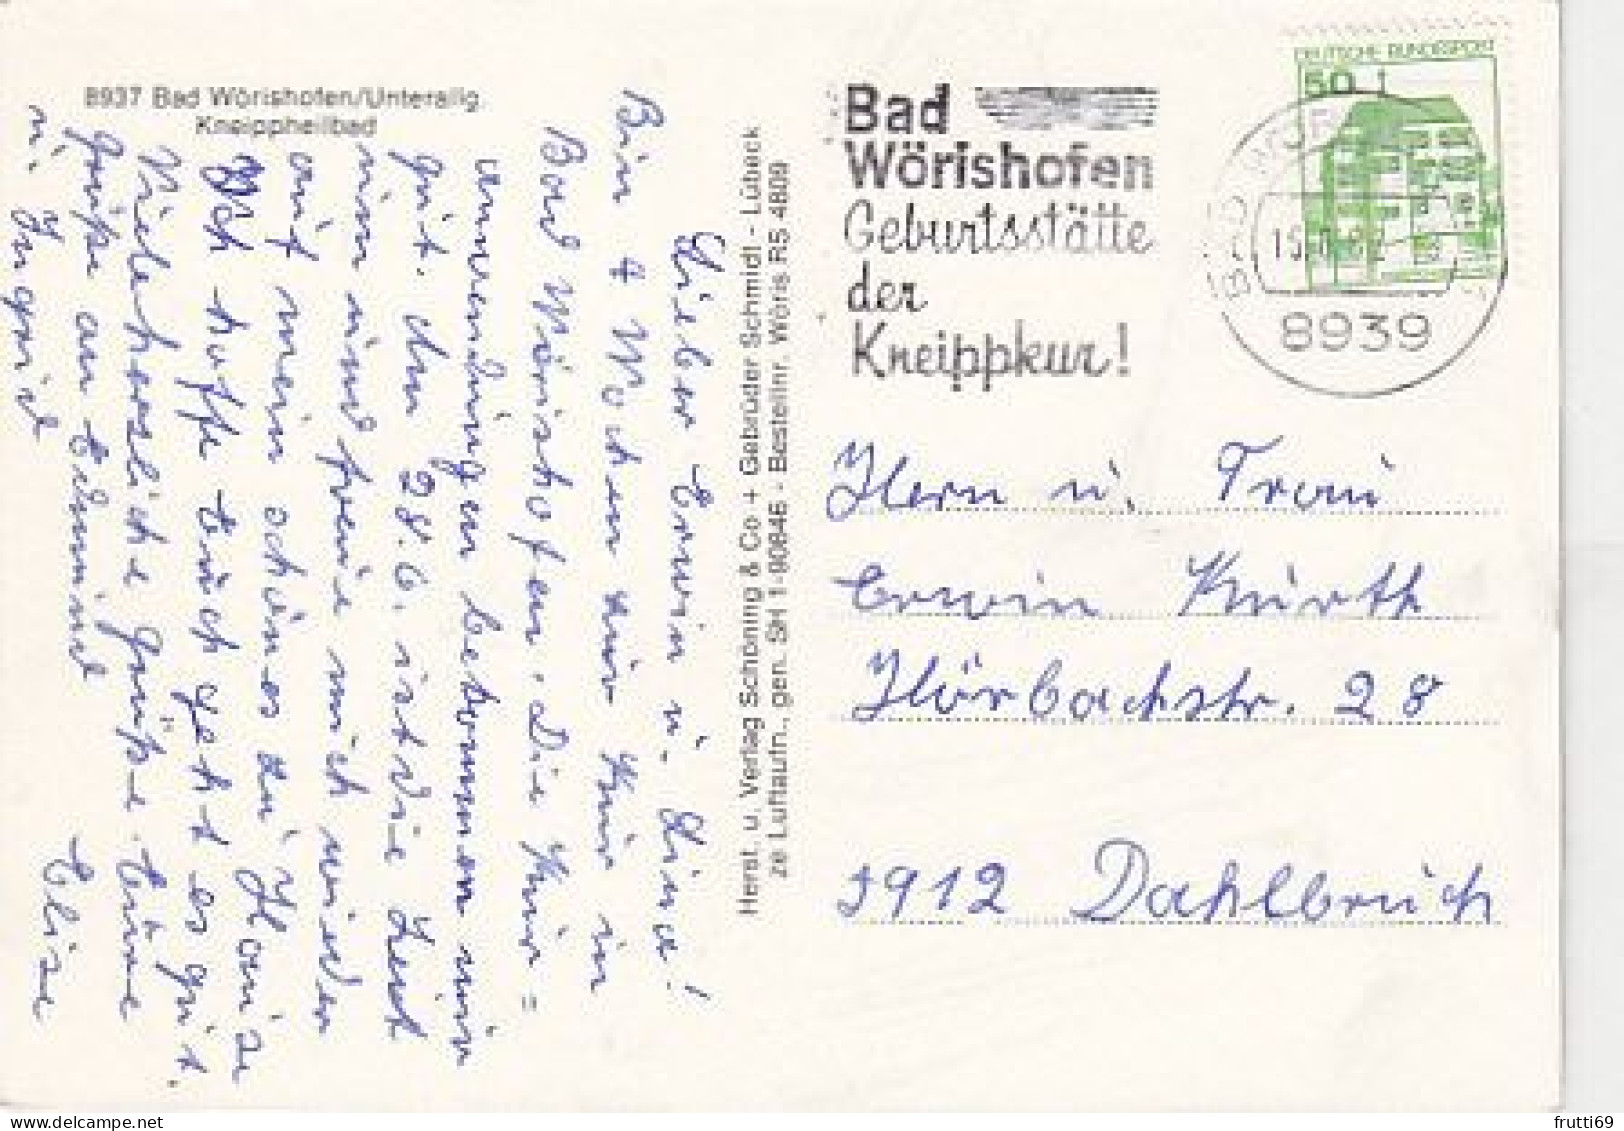 AK 215953 GERMANY - Bad Wörishofen - Bad Woerishofen